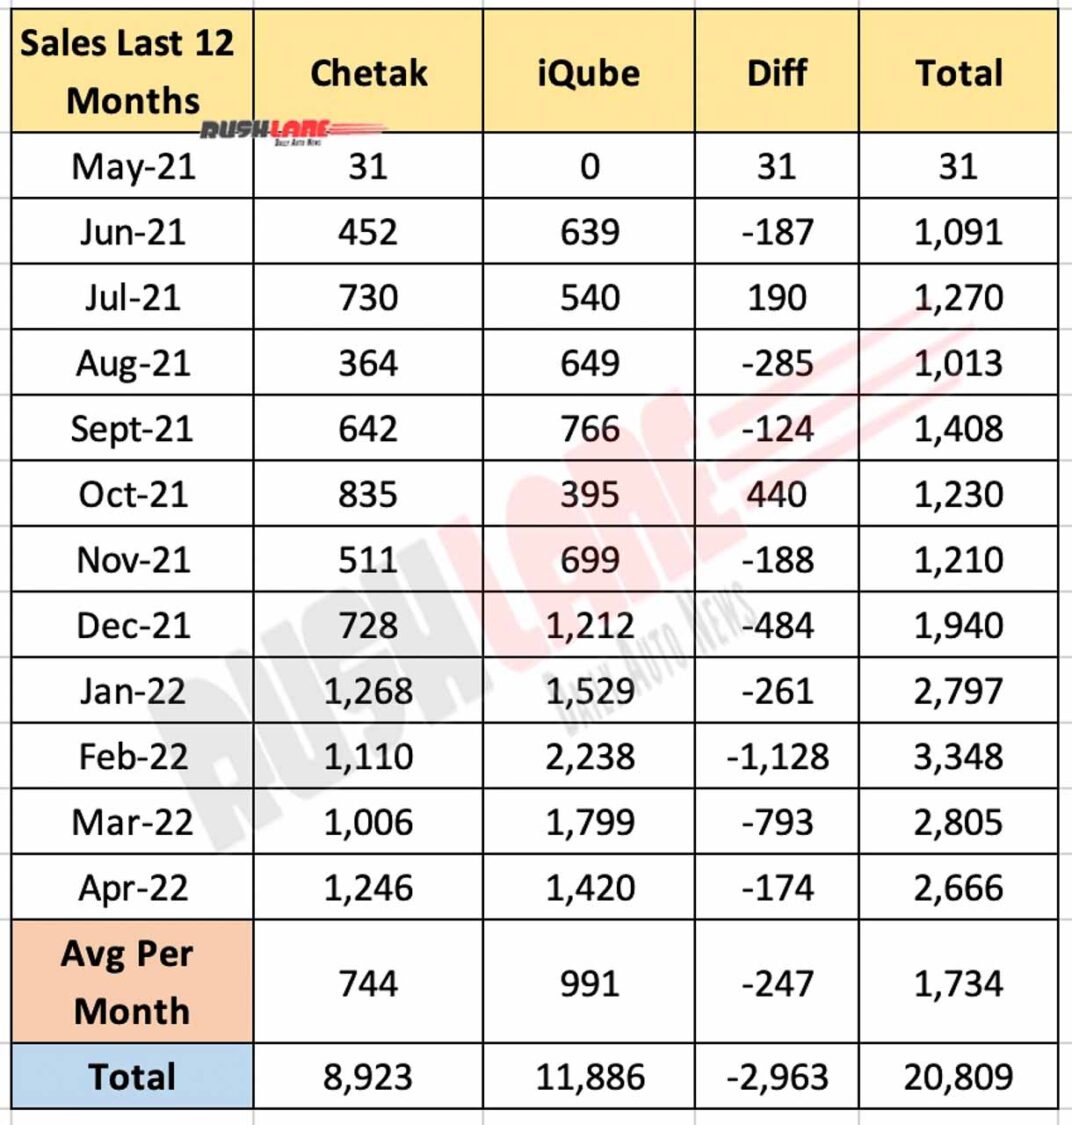 Chetak Vs iQube Sales - Last 12 months